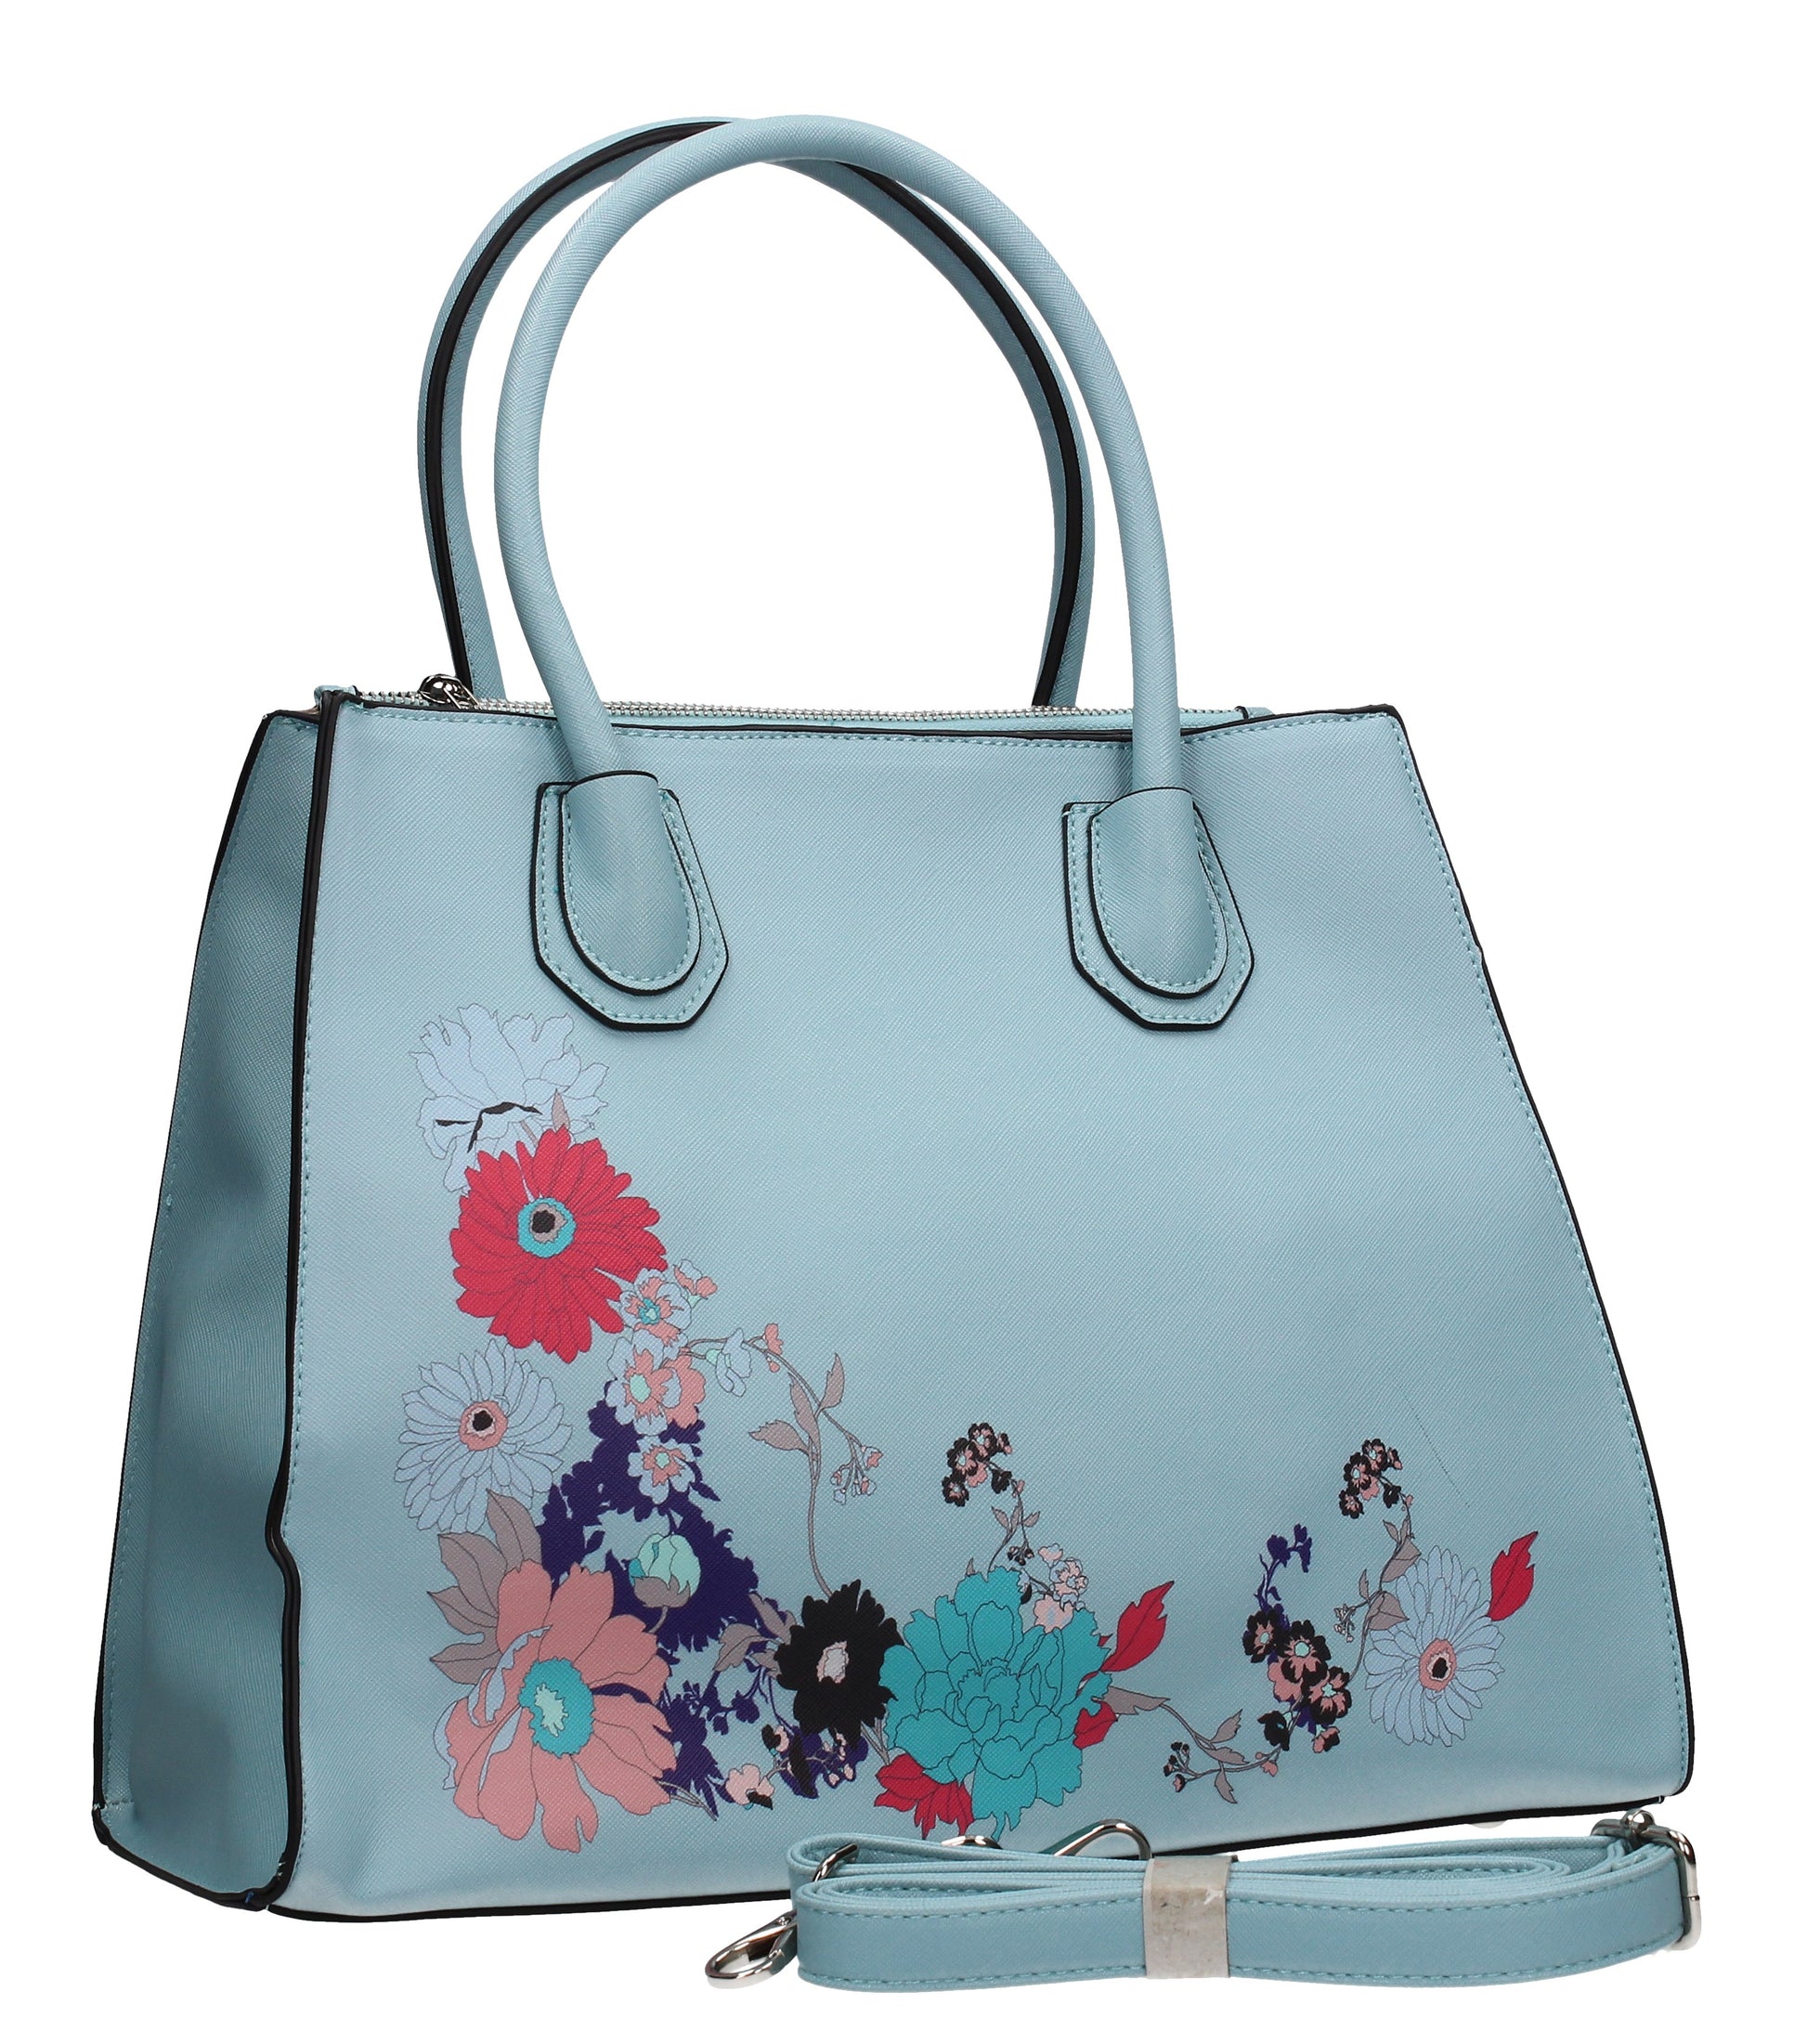 Hanna Floral Handbag Pale BlueBeautiful Cute Animal Faux Leather Clutch Bag Handles Strap Summer School